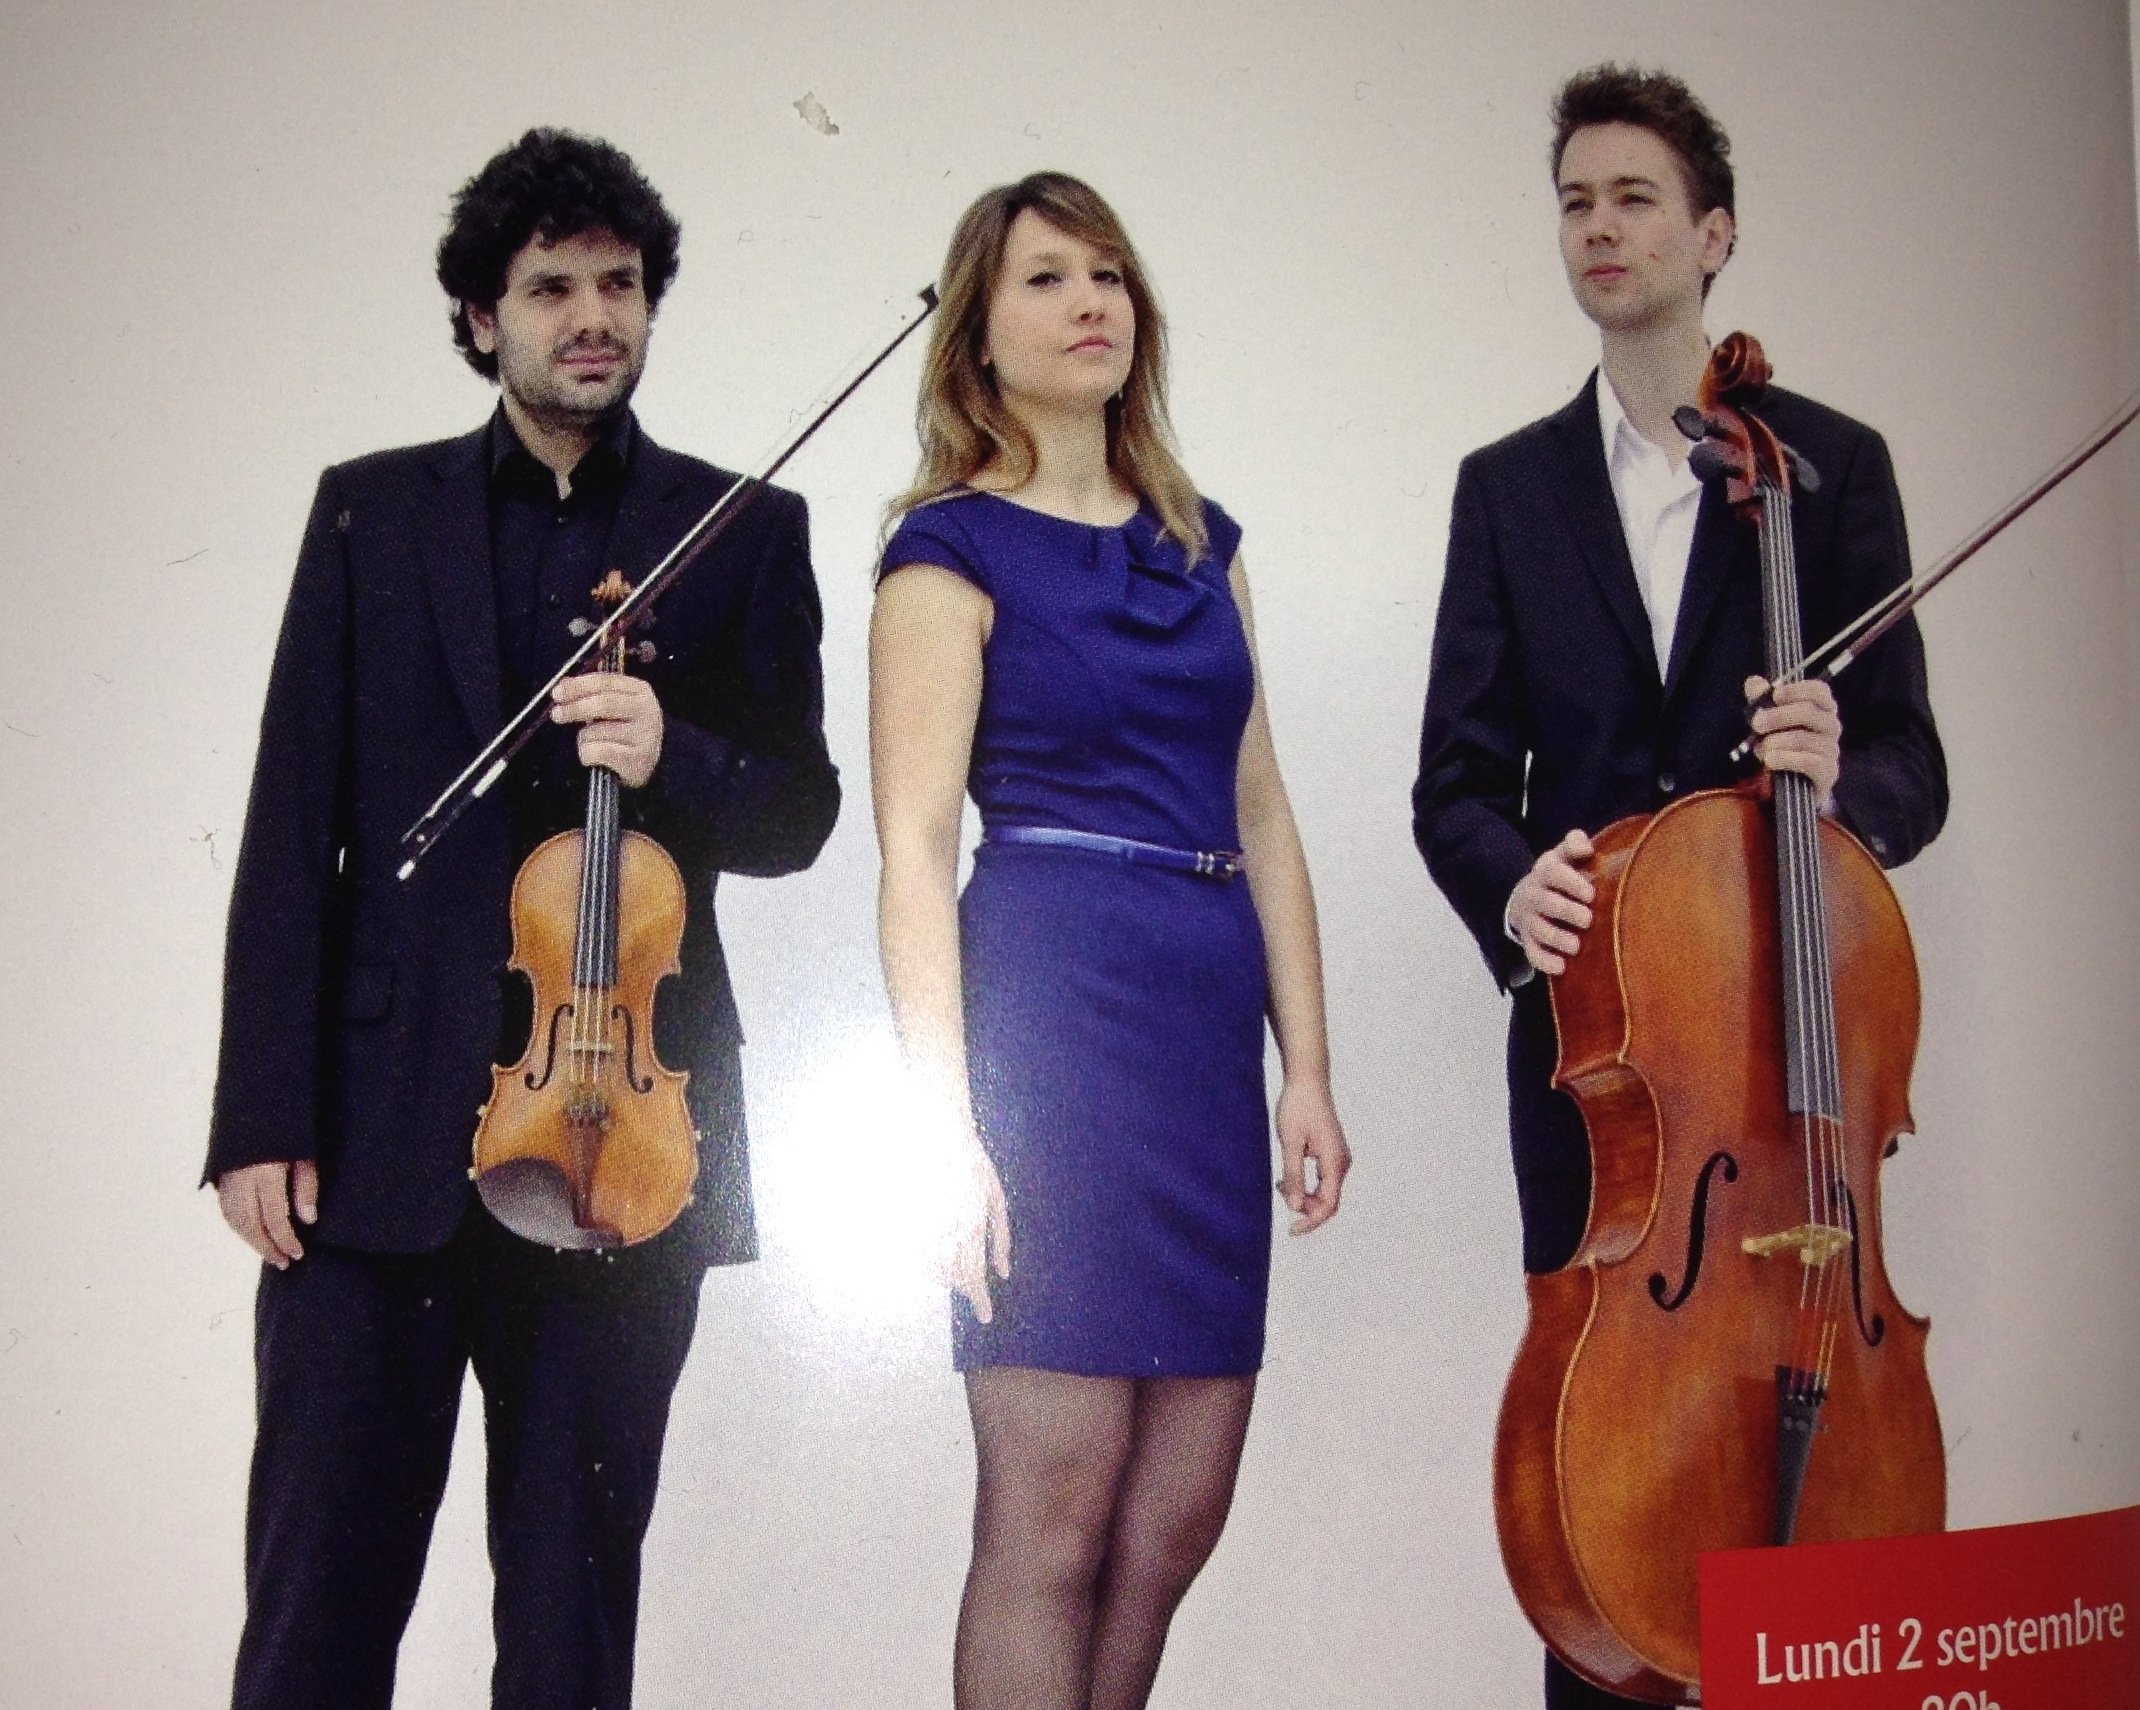 Find Lidija Pavlovic, piano Iason Keramidis, violin Alexandre Vay, cello's  songs, tracks, and other music | Last.fm